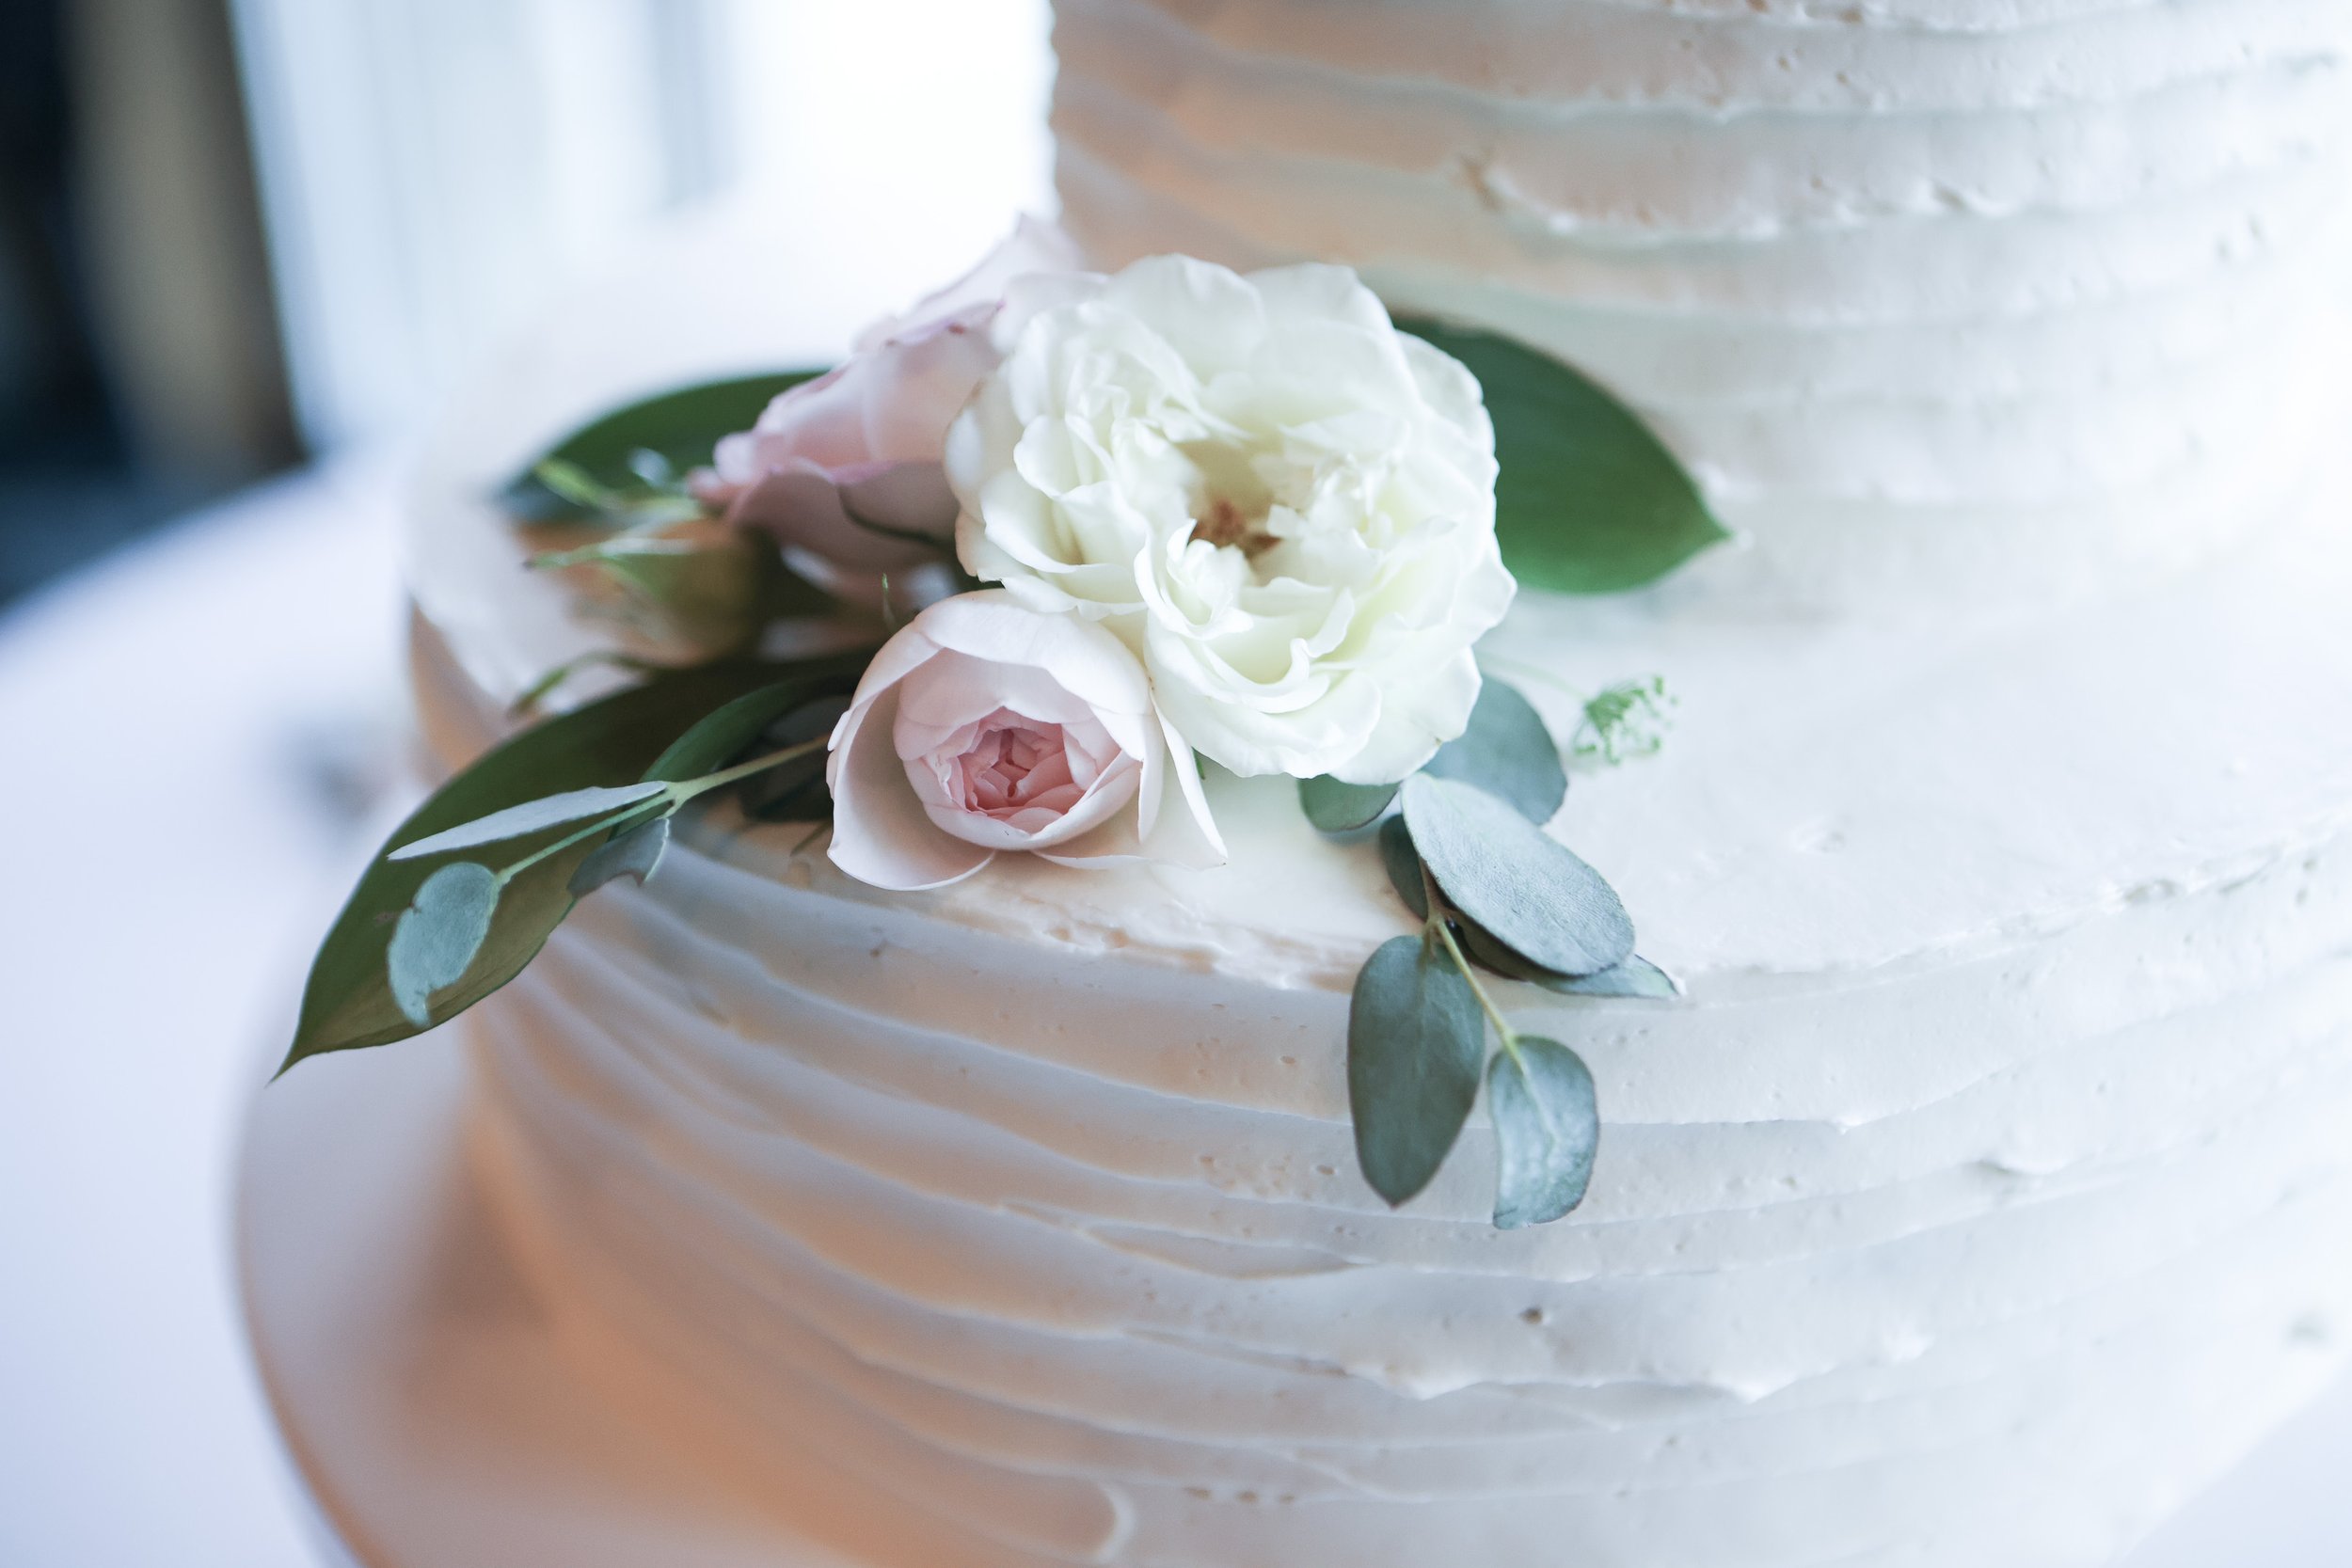 Flower detail on wedding cake